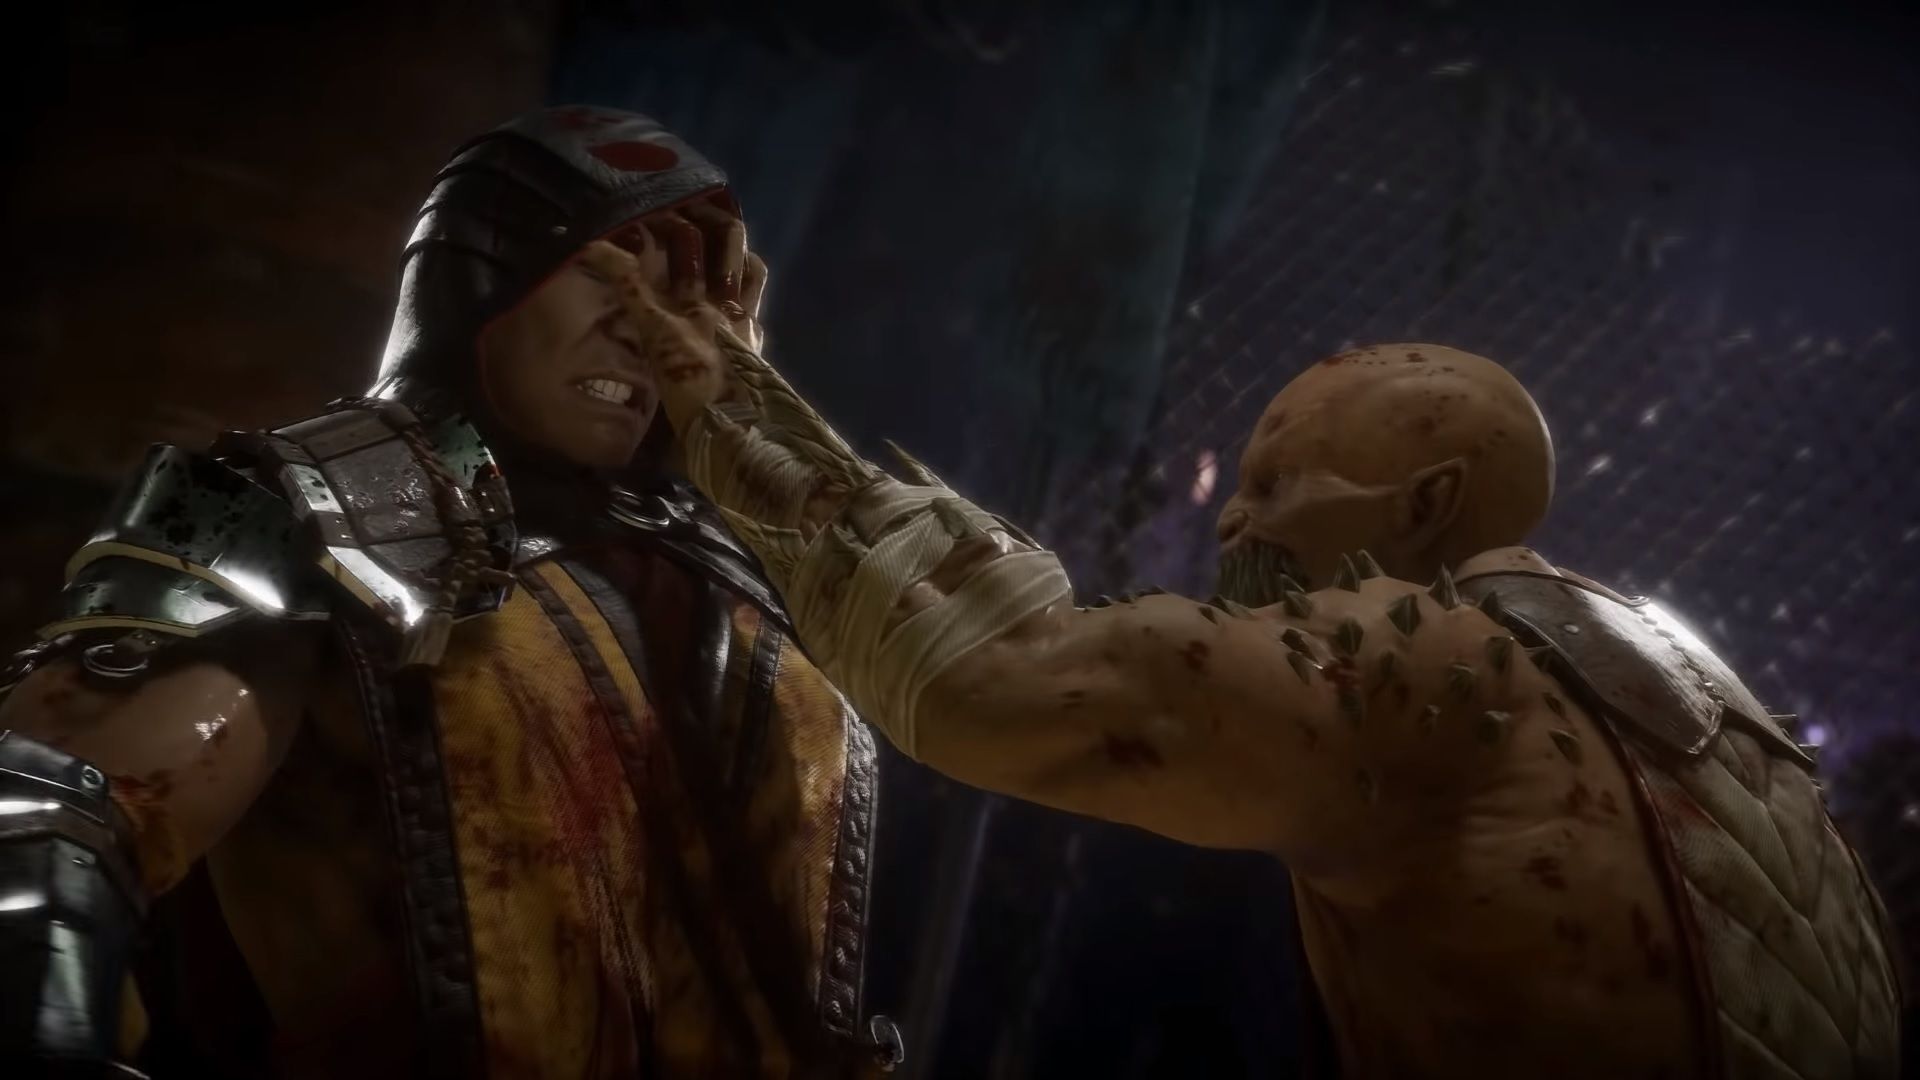 Baraka Mortal Kombat 11 Fatalities Guide List & Videos